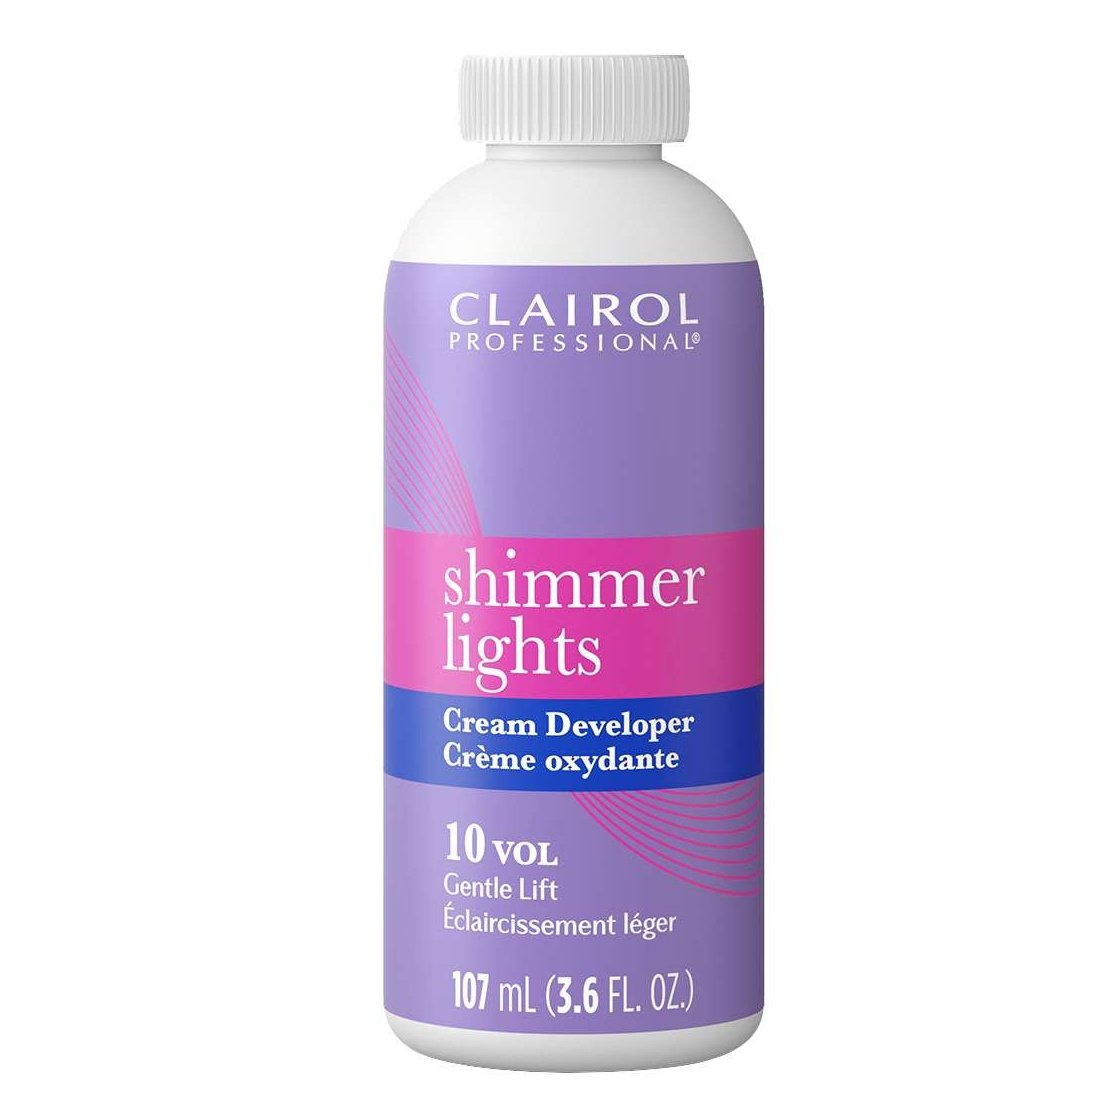 Clairol Shimmer Lights Cream Developer 10 Vol